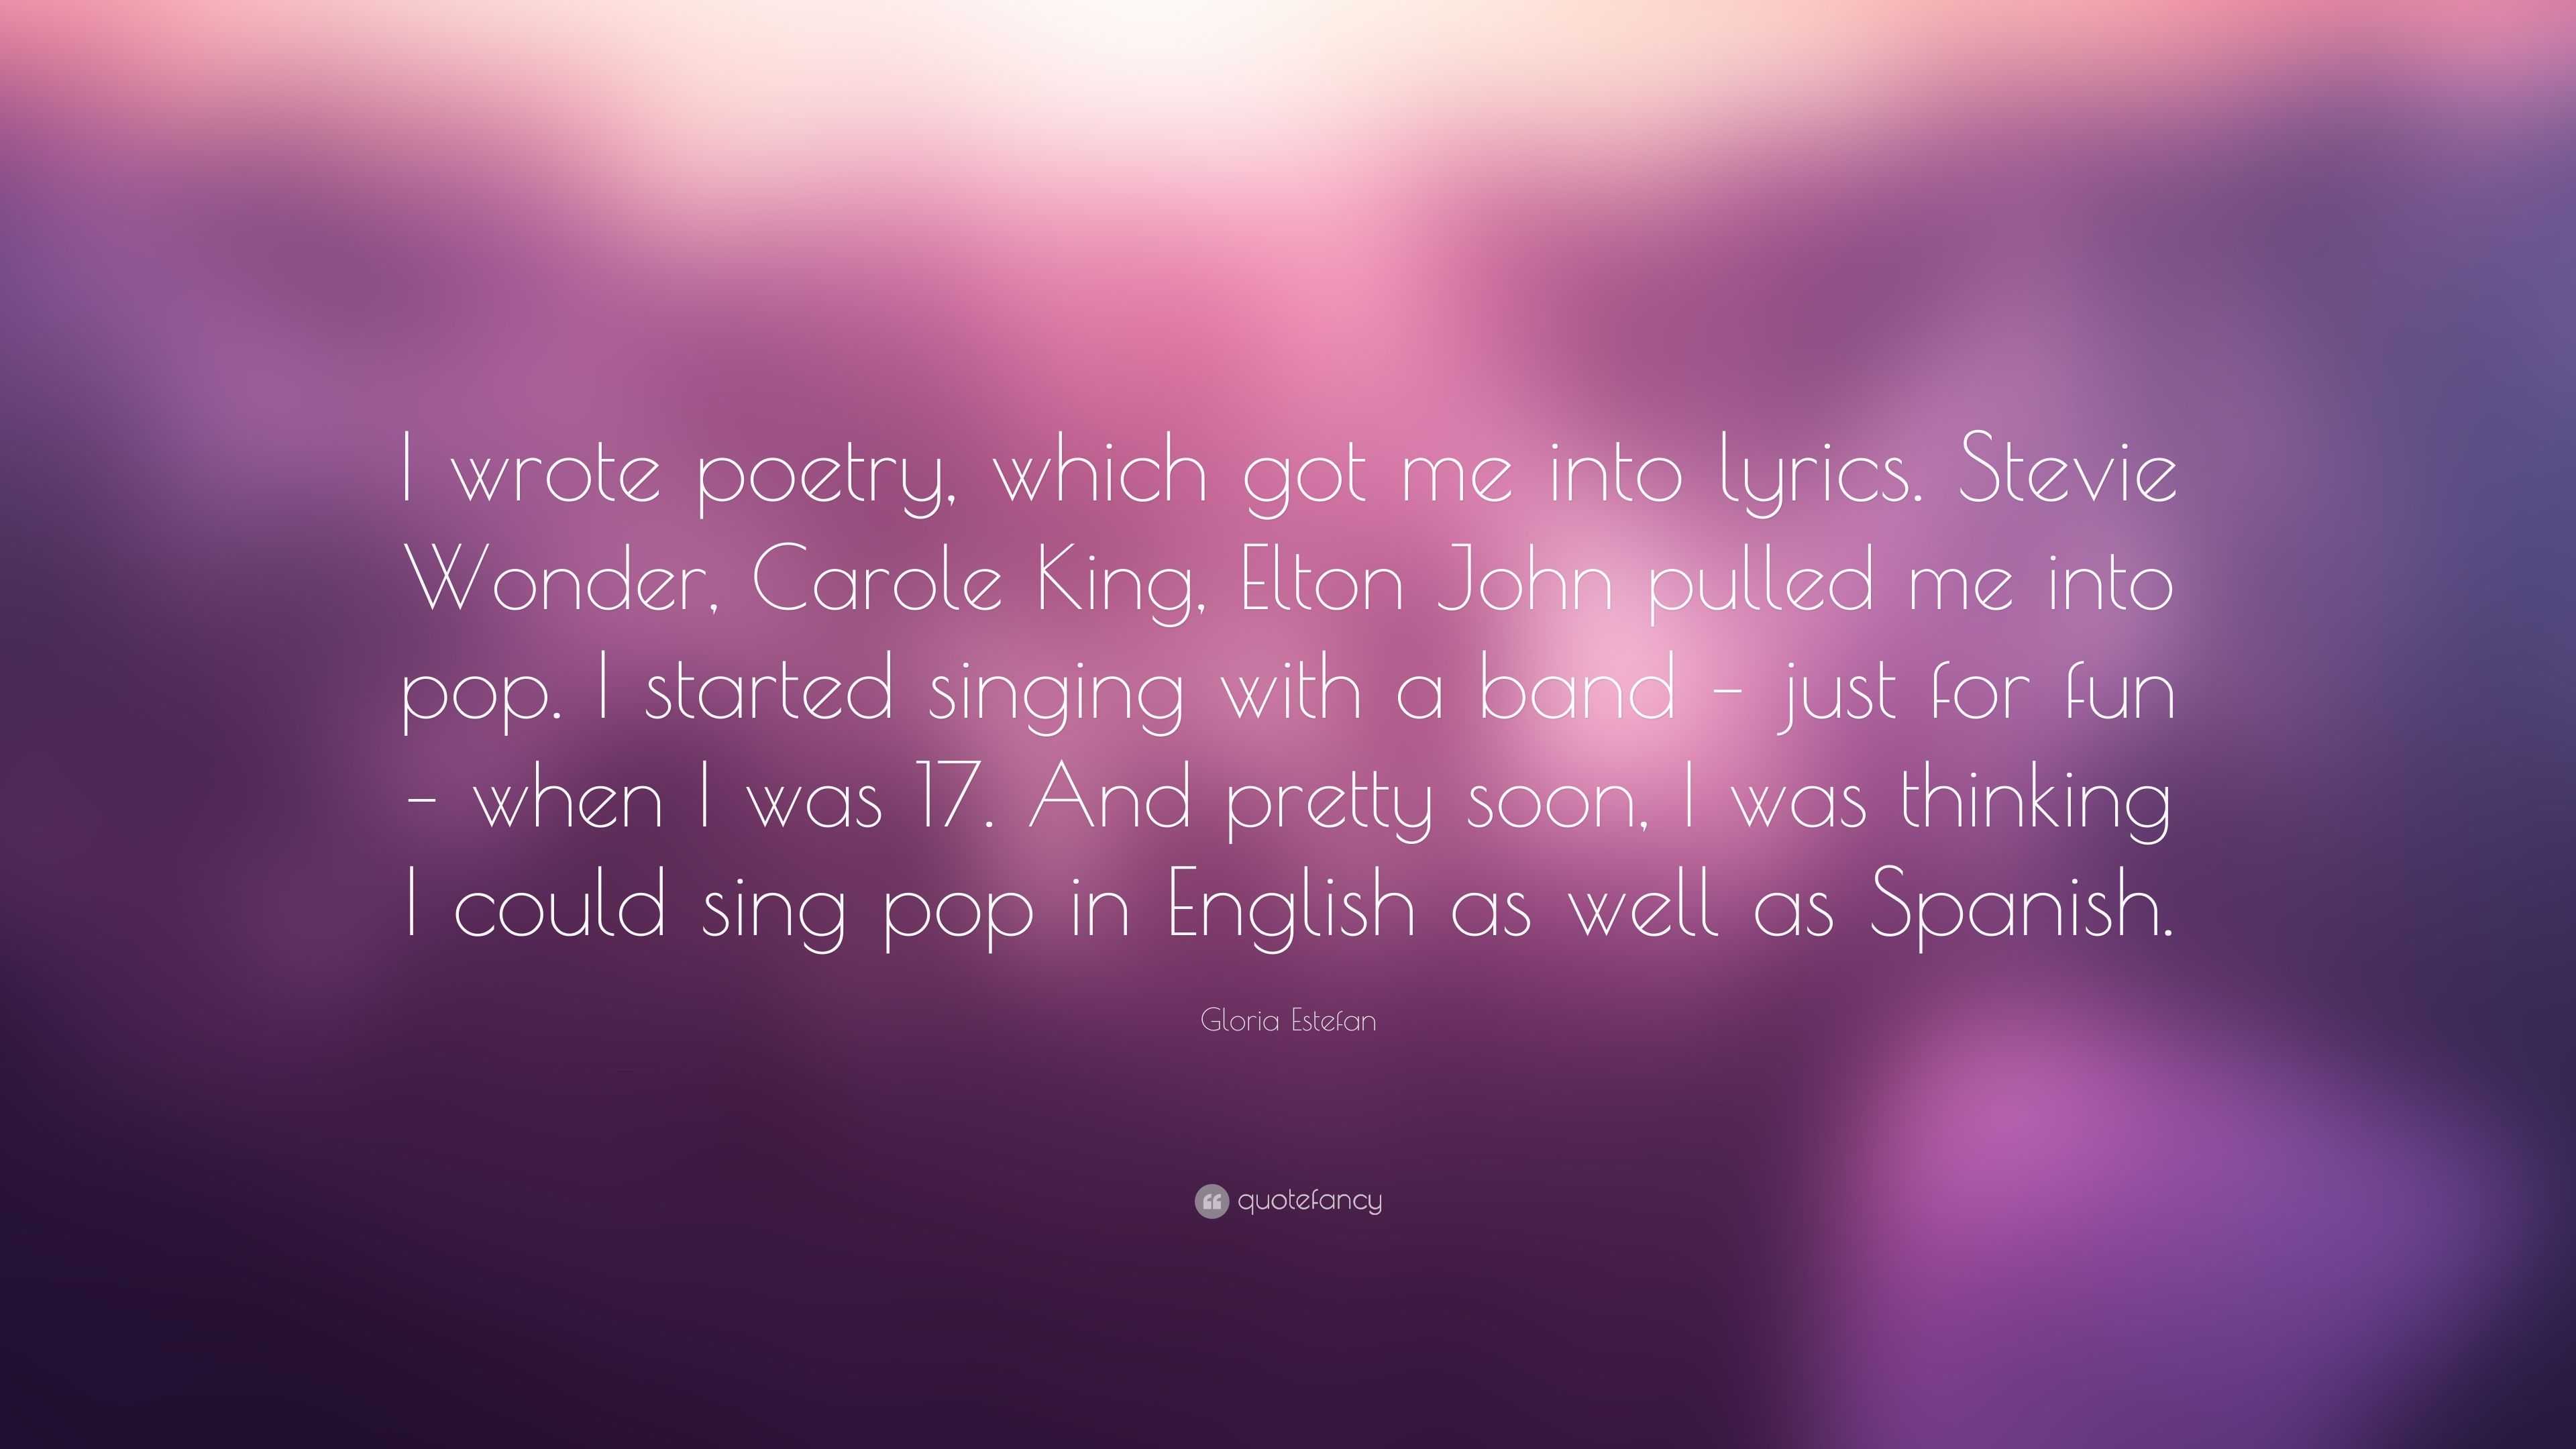 Gloria Estefan Quote: “I wrote poetry, which got me into lyrics